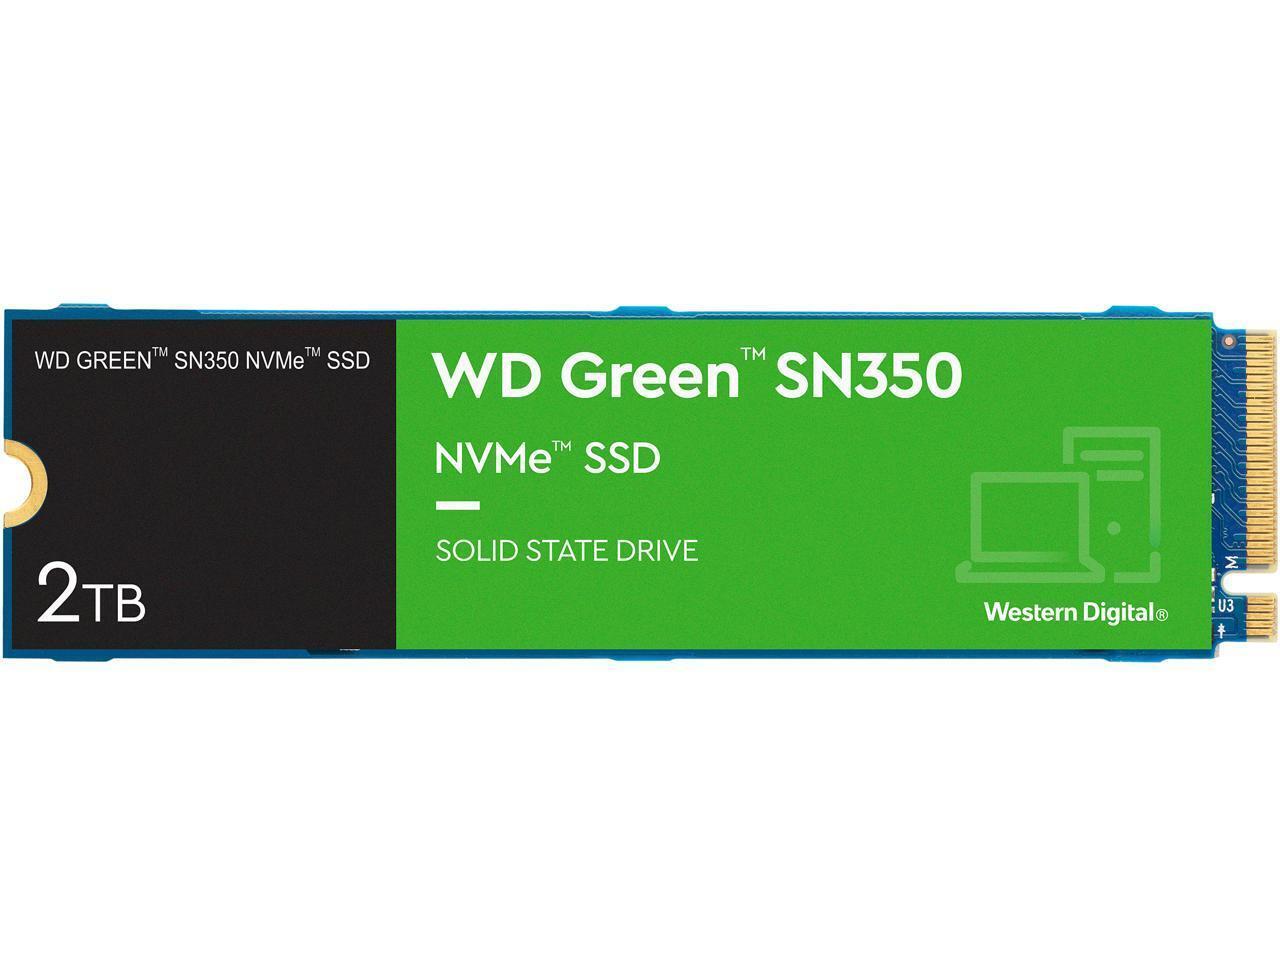 Western Digital WD Green 2TB SN350 NVMe M.2 SSD 2280 PCIe 3.0x4 Internal Drive